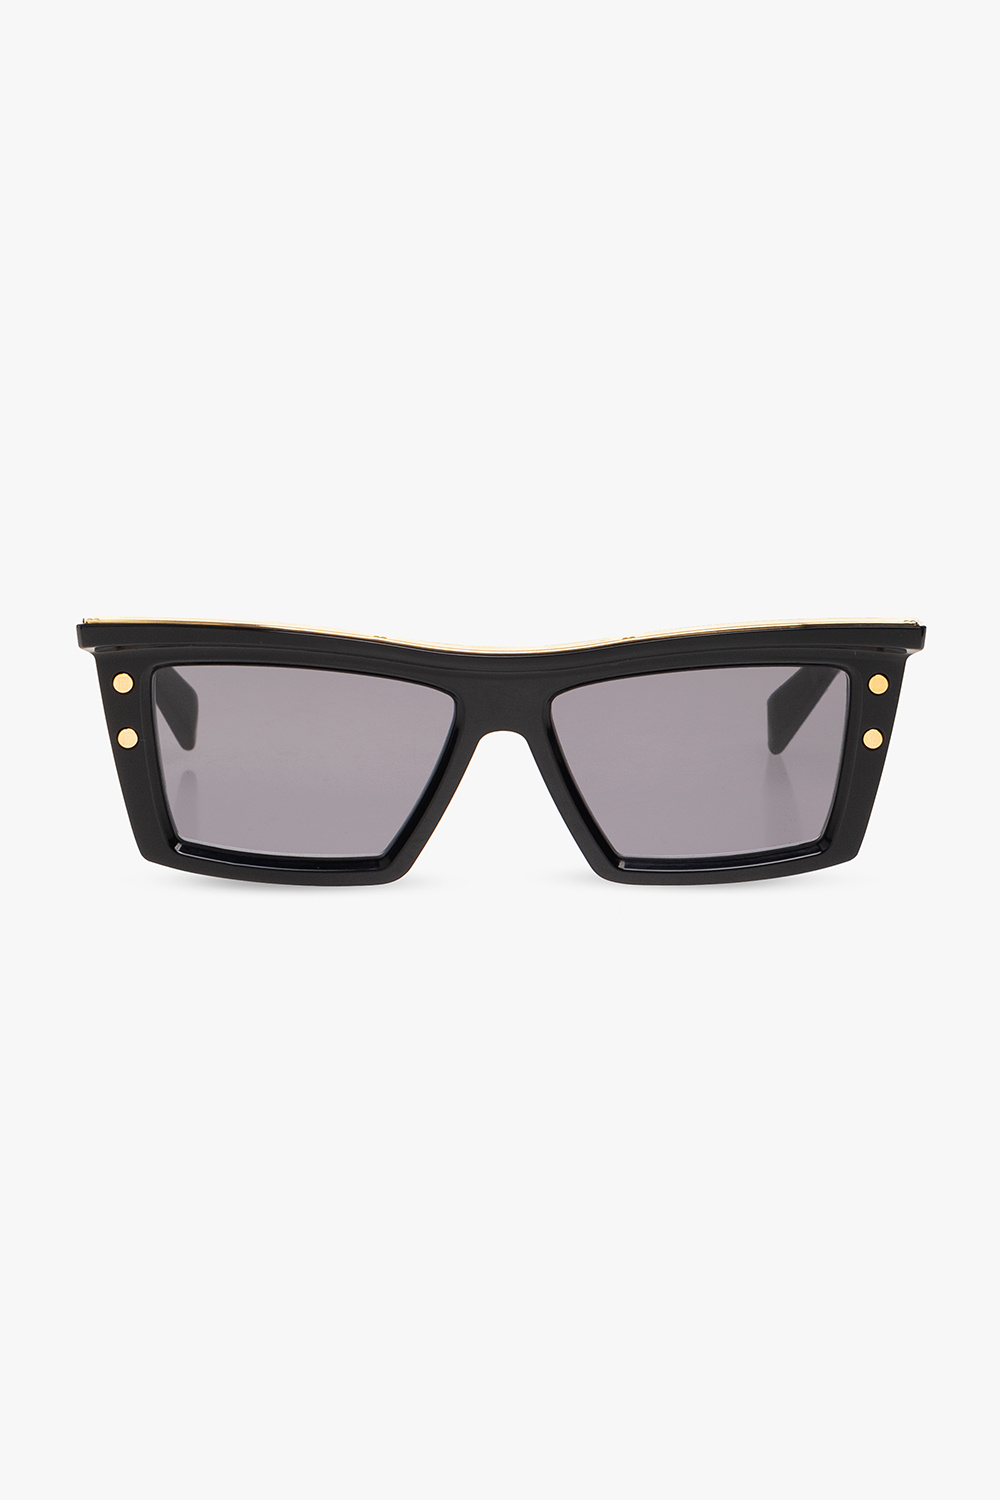 Balmain ‘B-VII’ amp sunglasses